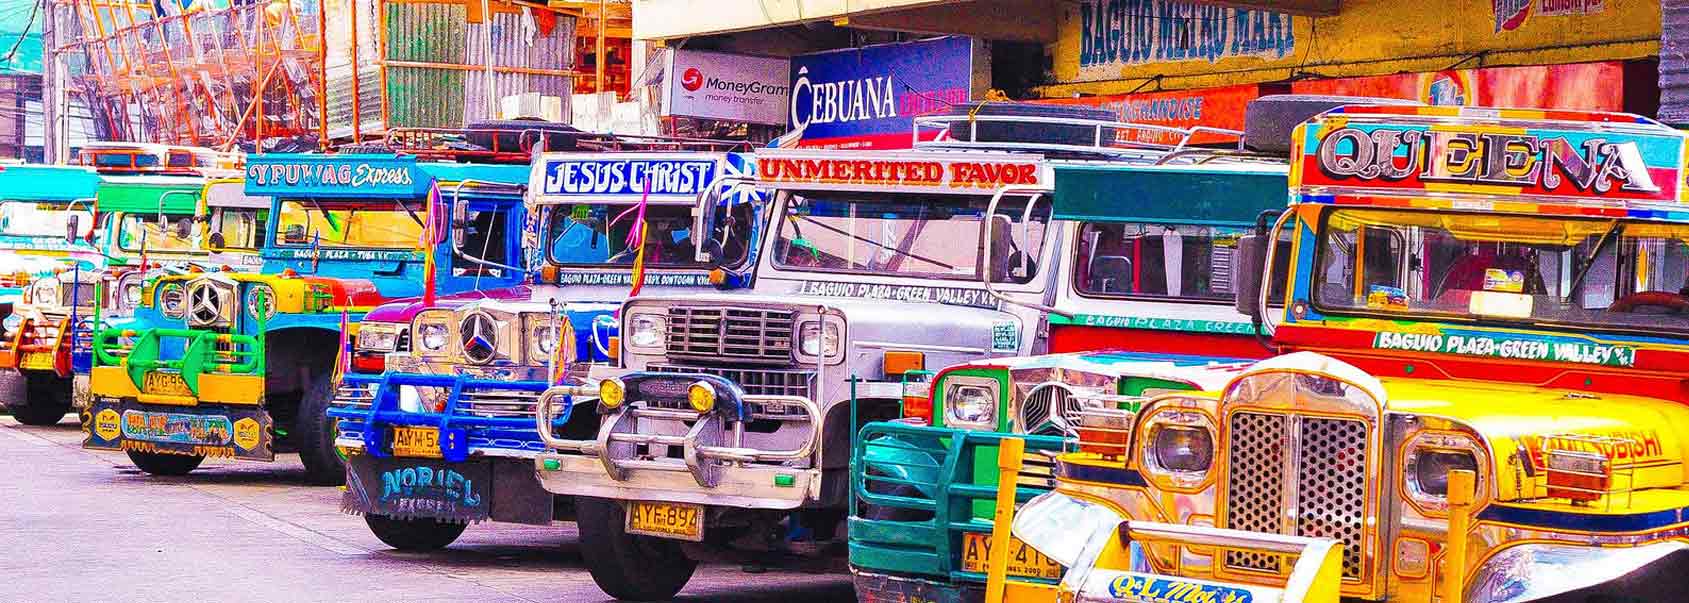 jeepney-transportation-philippines